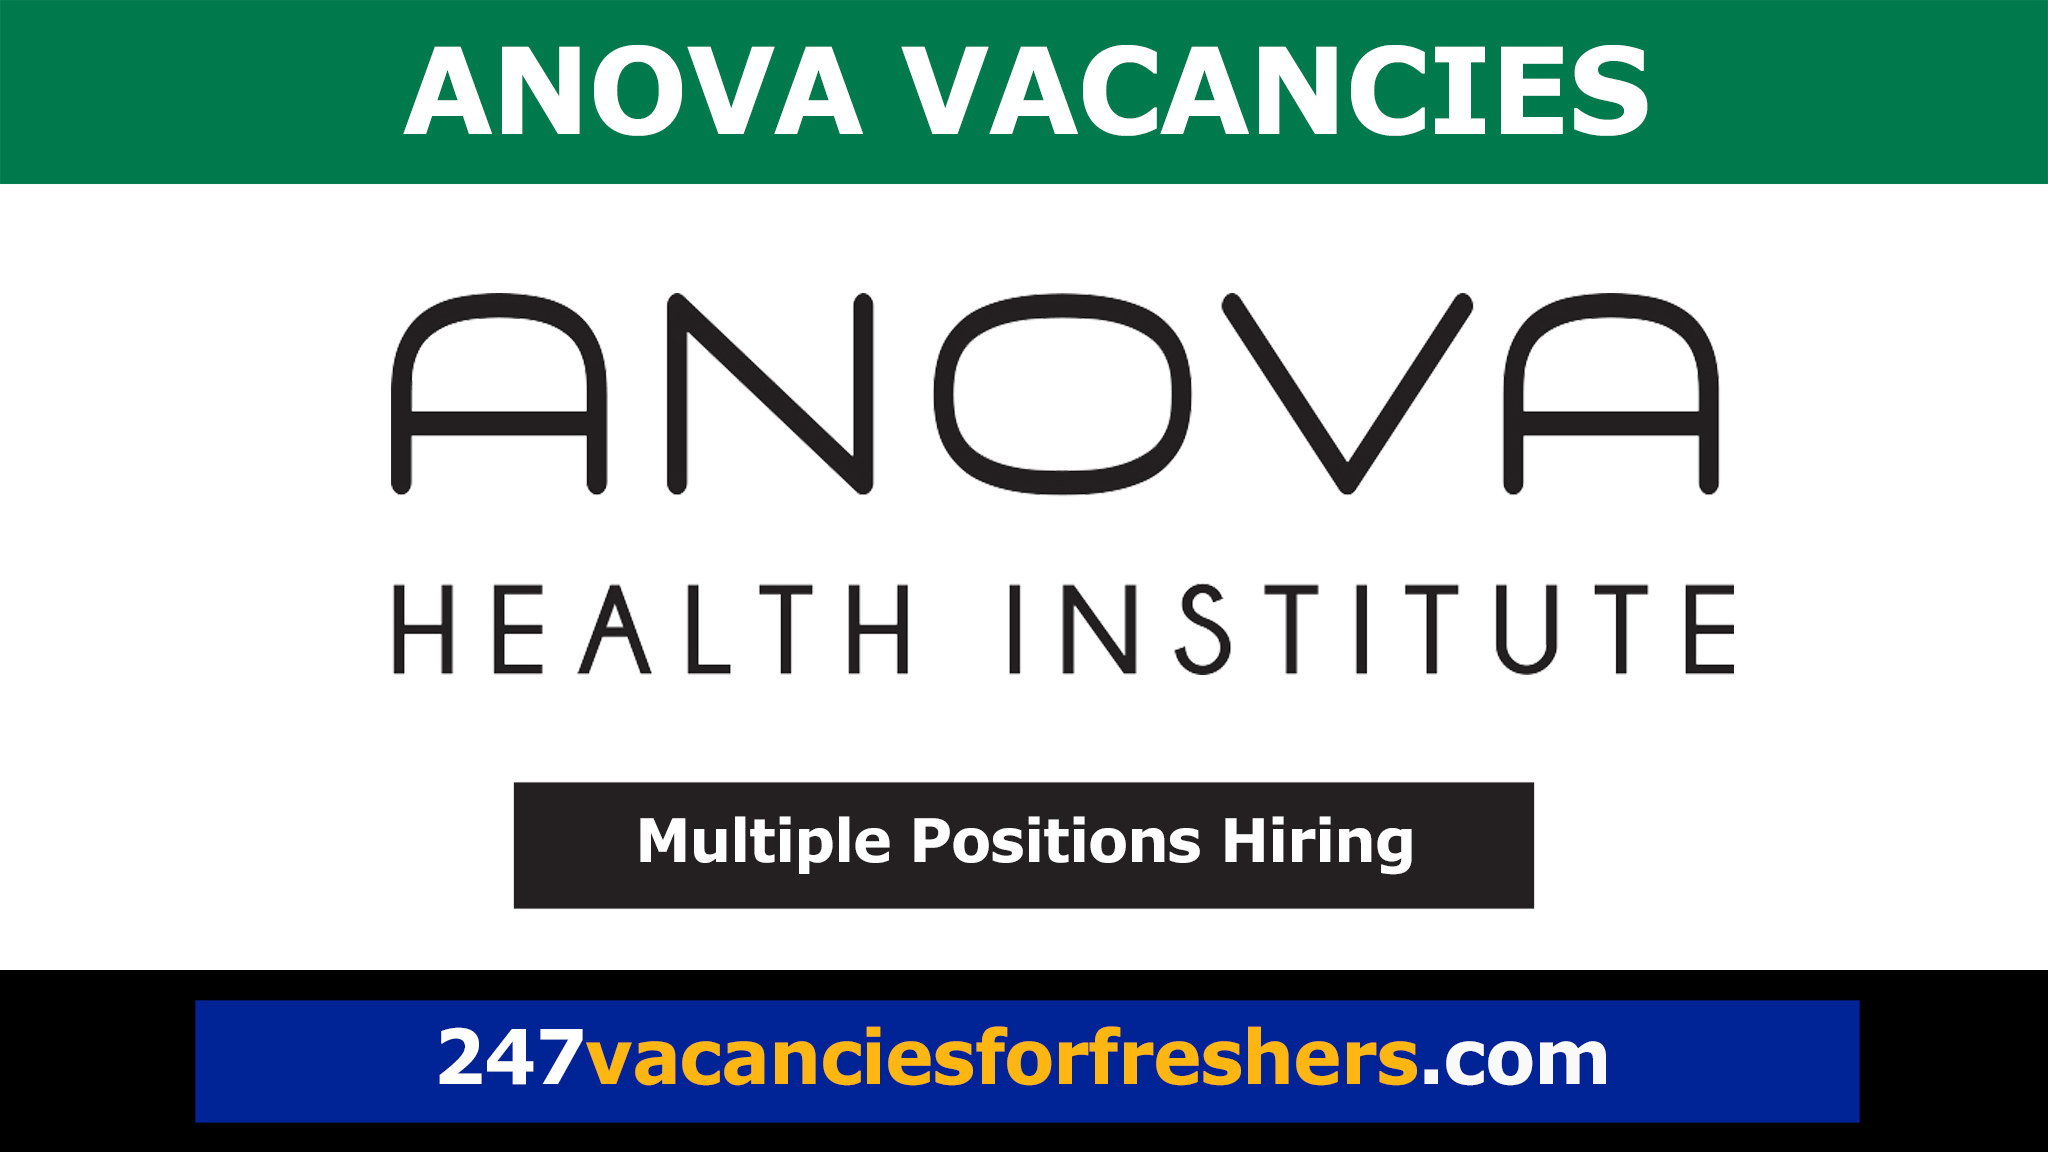 ANOVA Vacancies